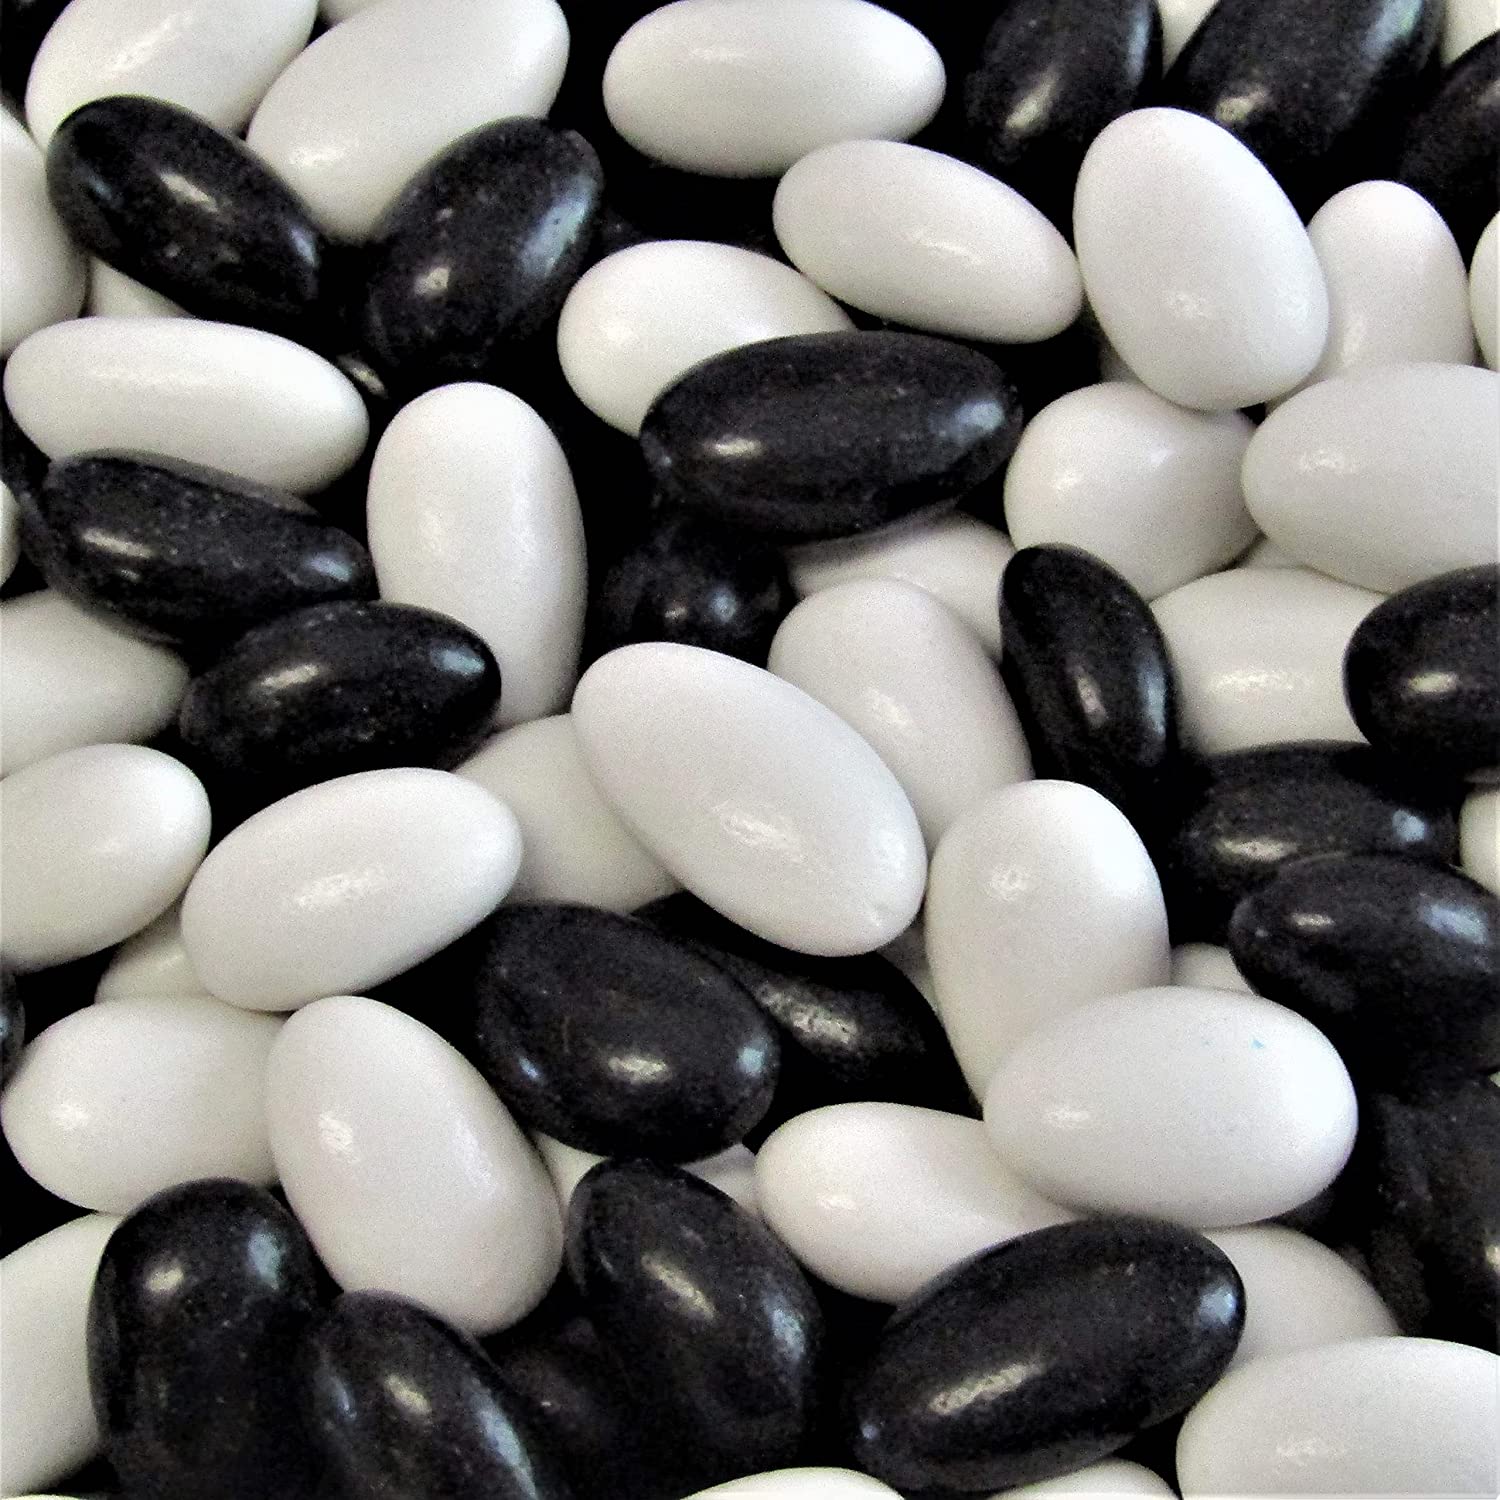 Black and White Dragées Almonds